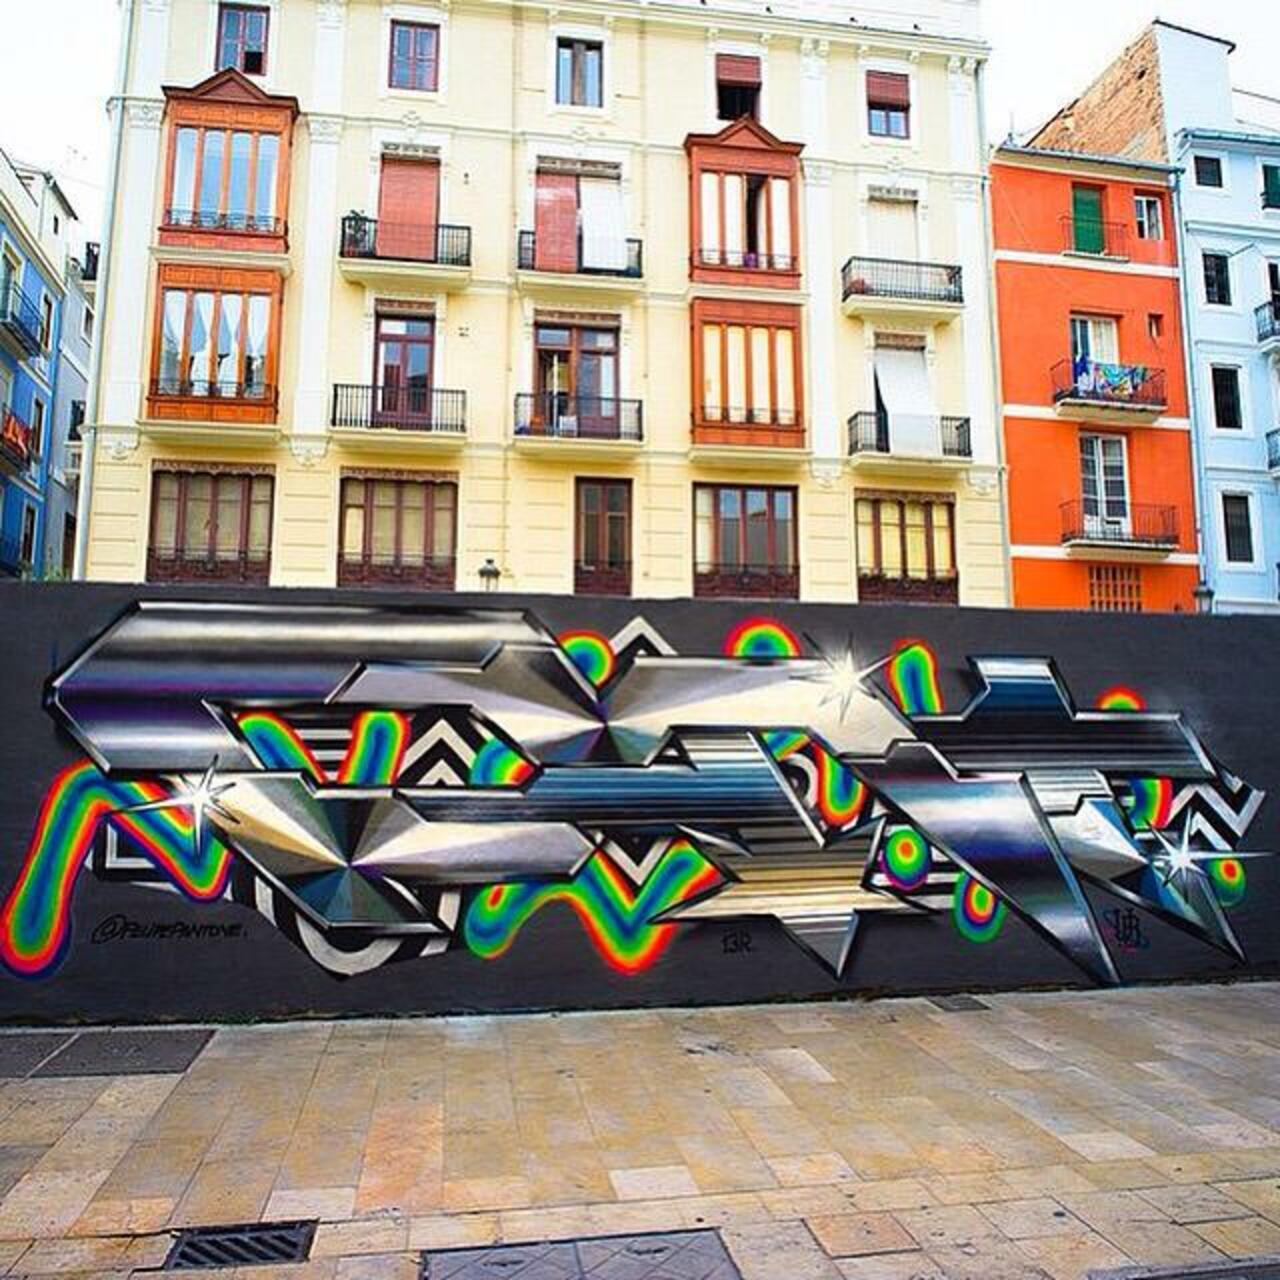 Estos #graffosguapos @spokbrillor y @felipepantone en Valencia, #España #graffiti #streetart #mural http://t.co/dIfUUFYJ7t